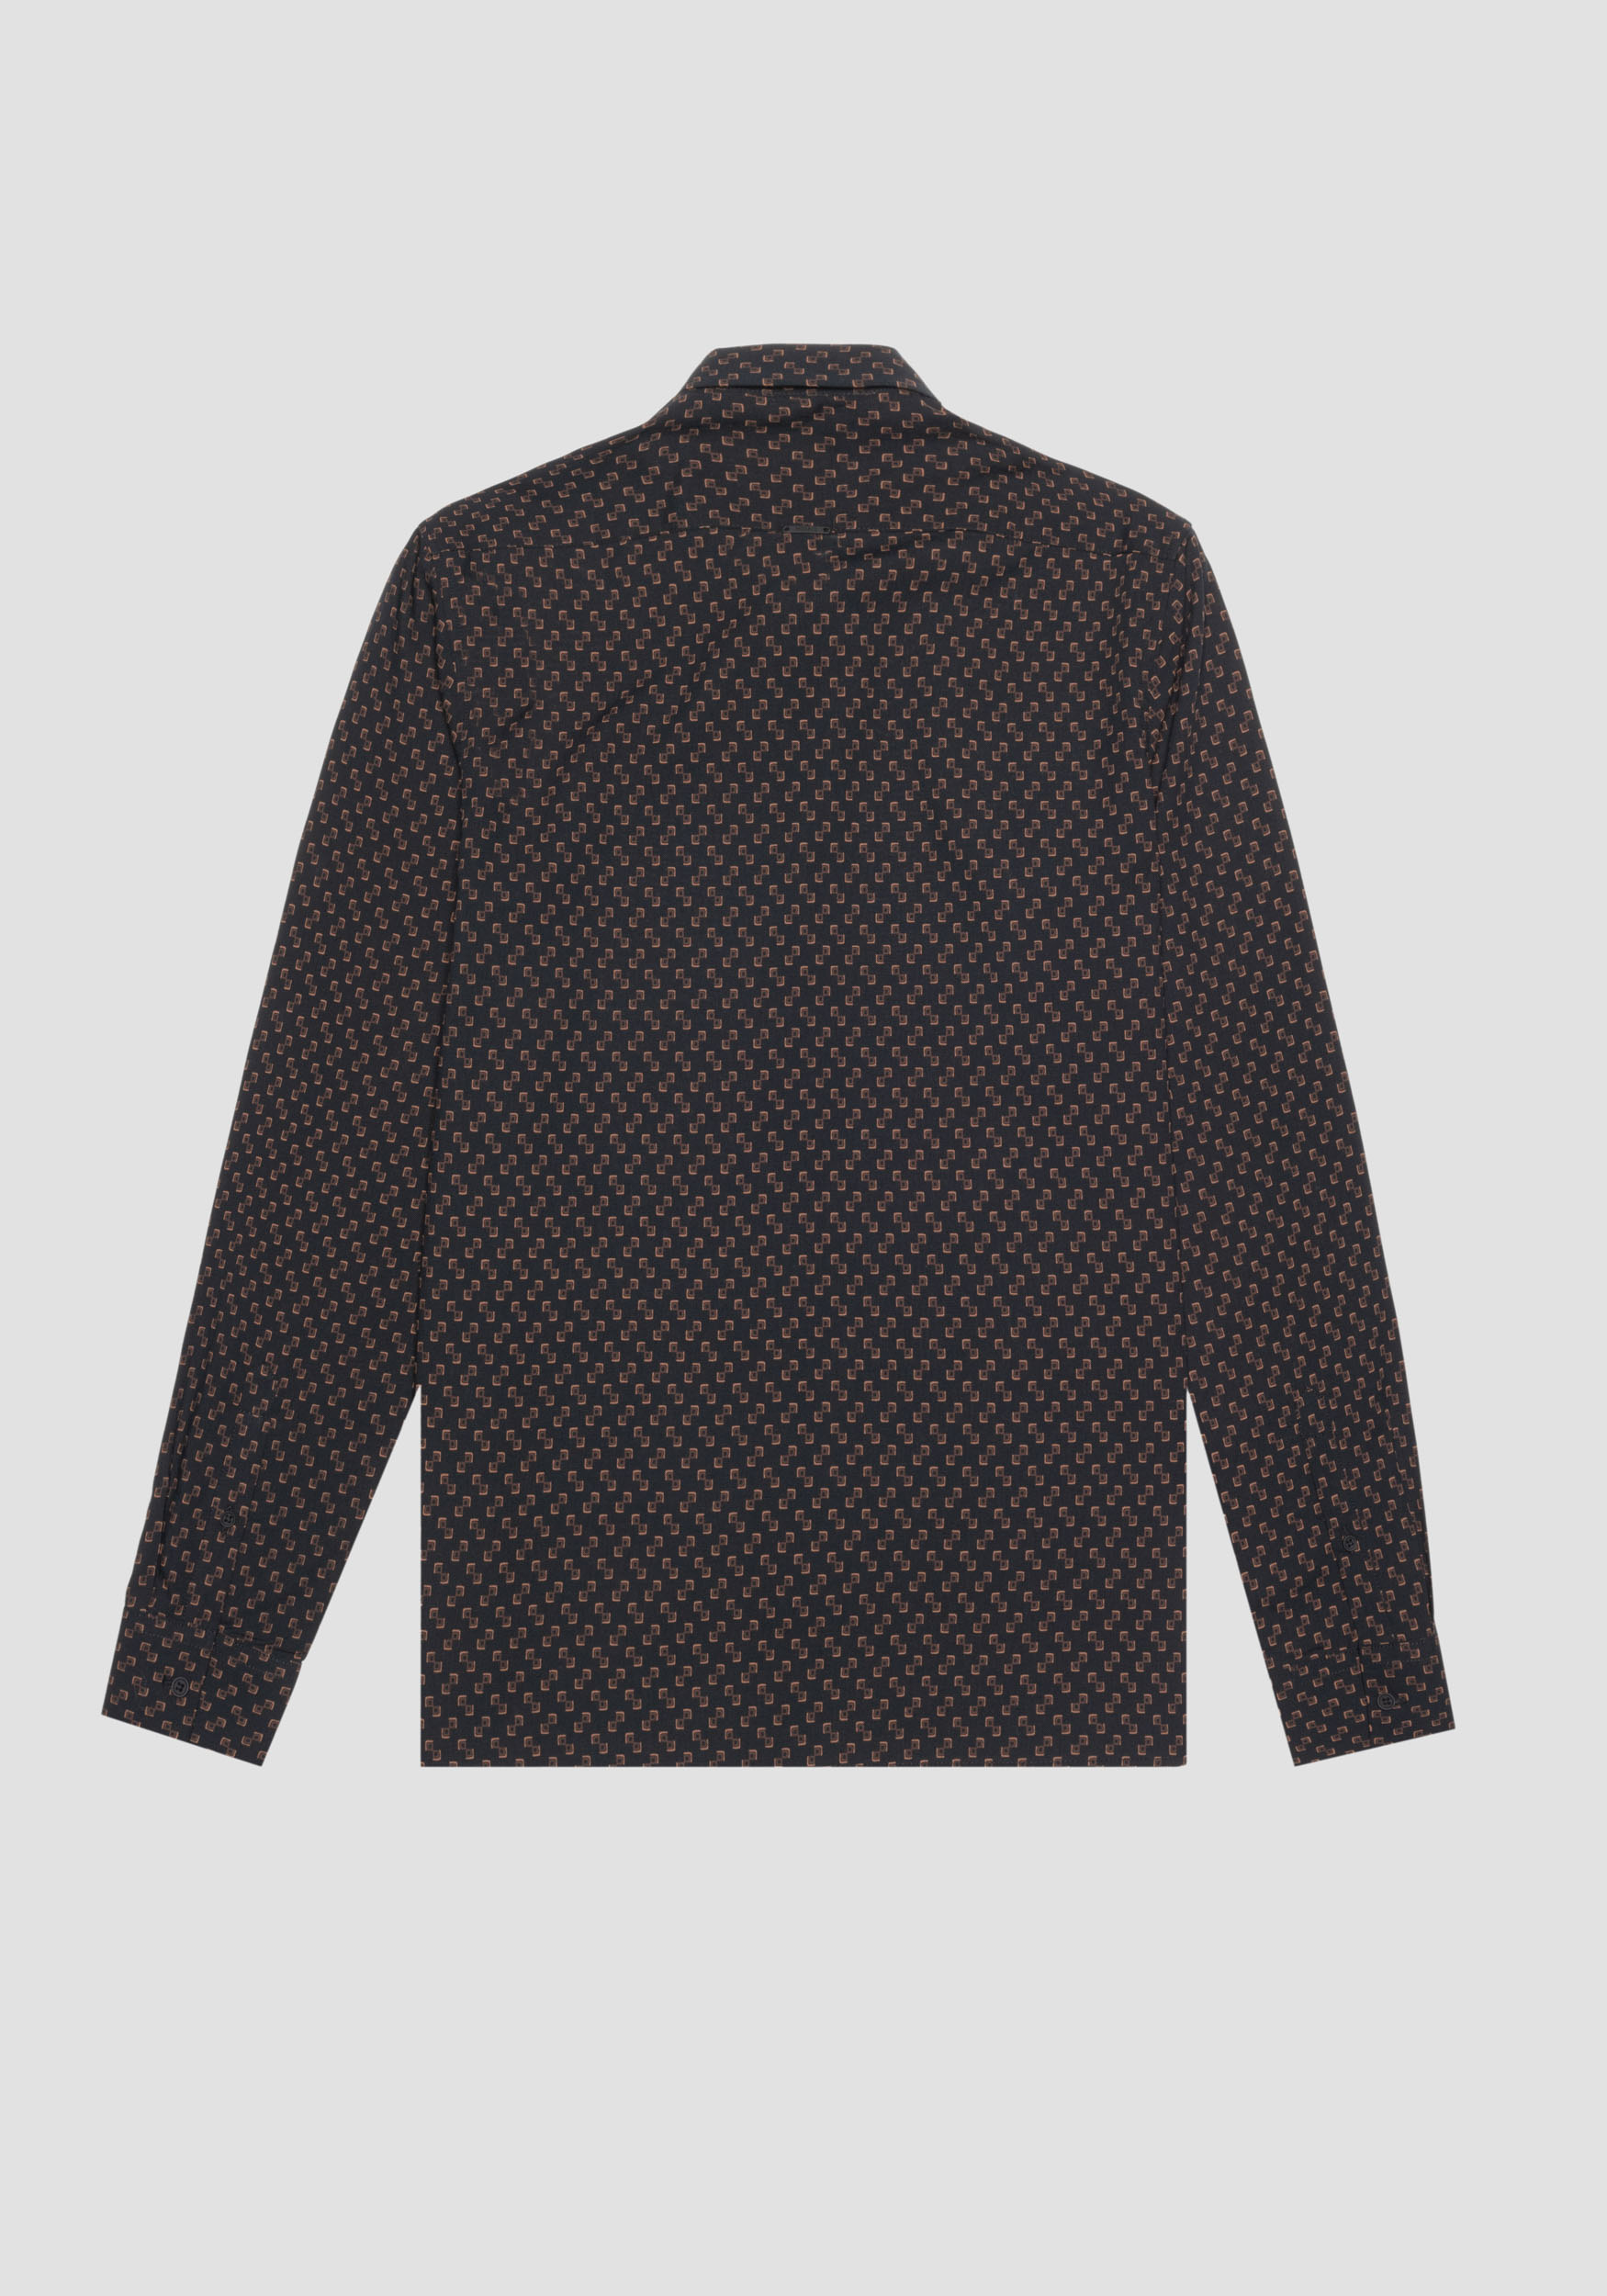 Antony Morato Chemise Regular Fit Barcelona En Tissu De Coton Melange Imprime Chameau Fonce | Homme Chemises